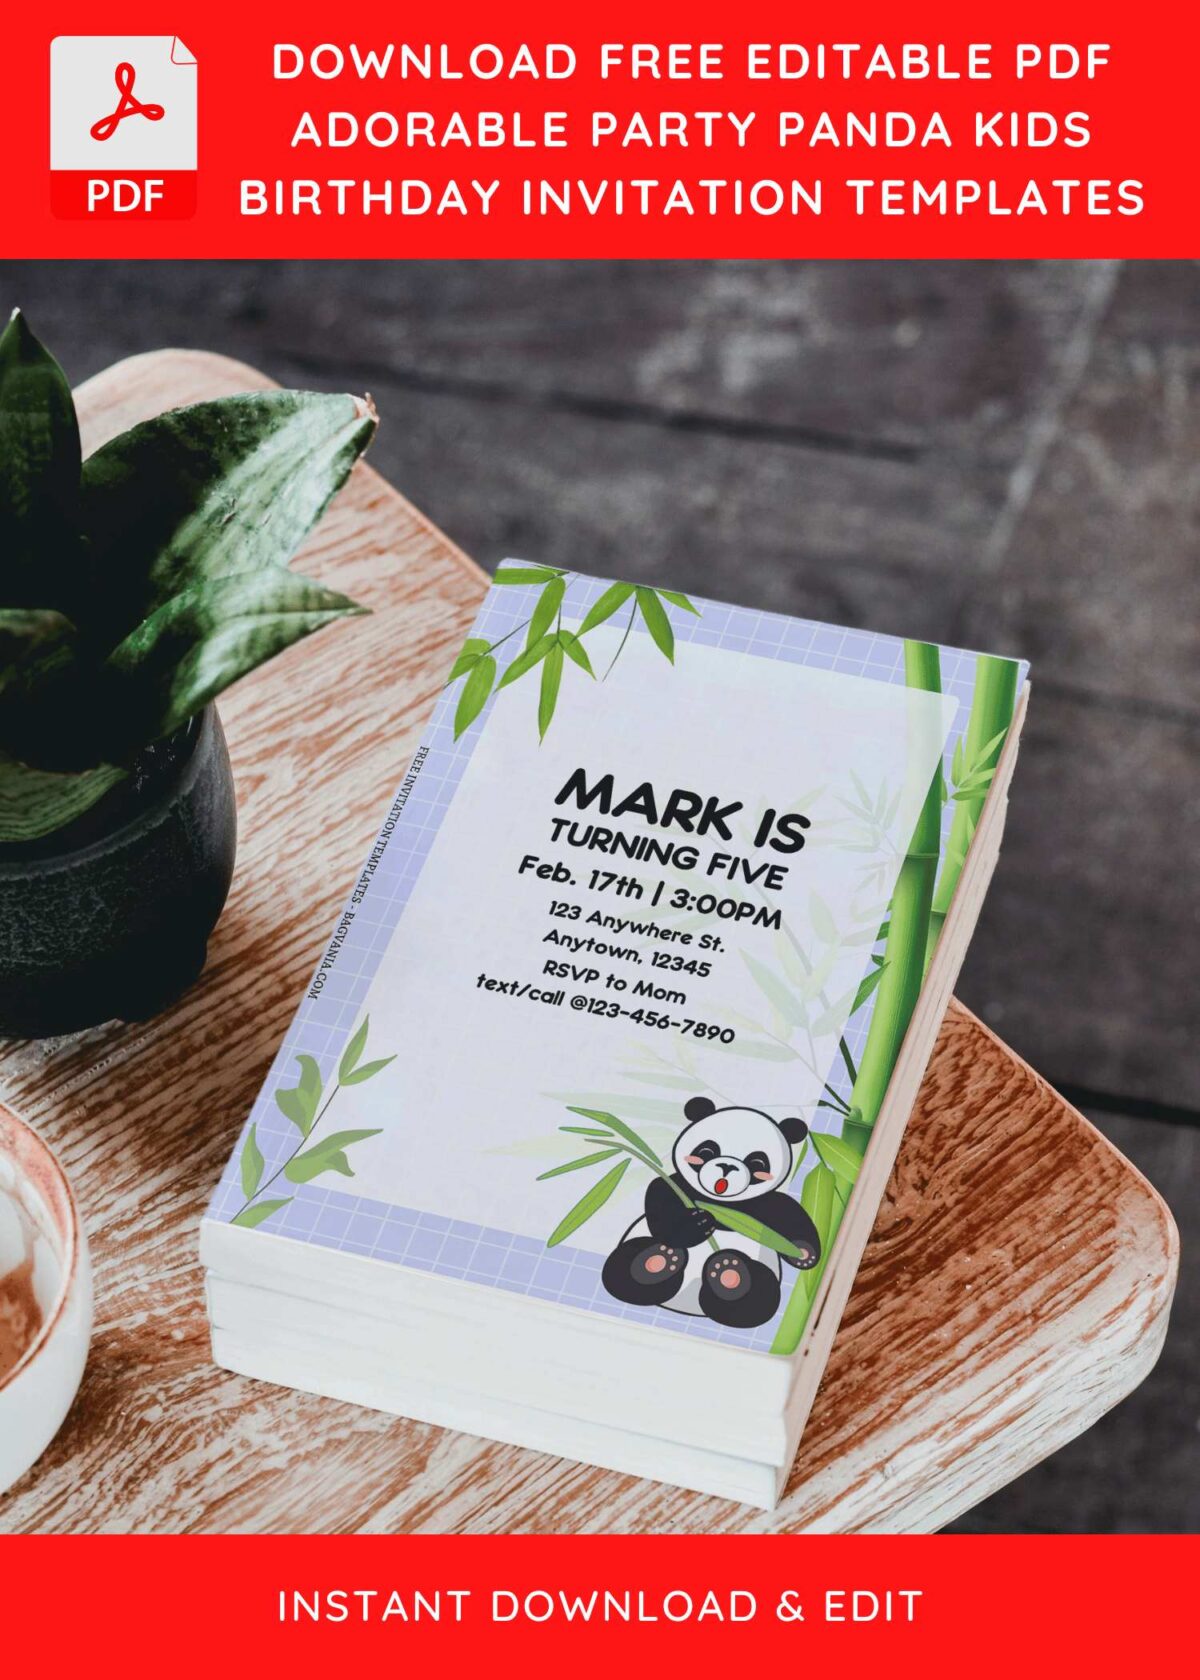 (Free Editable PDF) Playful Baby Panda Birthday Invitation Templates D